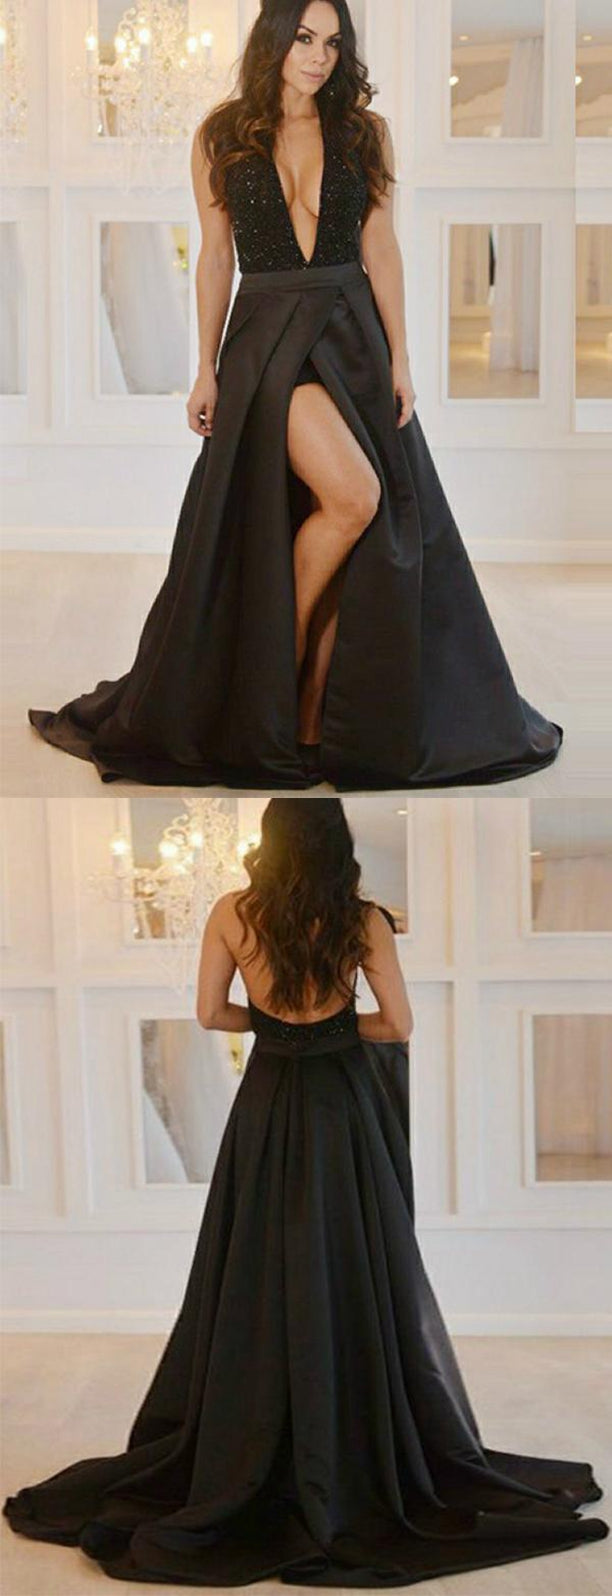 Sexy Black Prom Dress Slit Skirt, Evening Dress, Dance Dresses, Graduation School Party Gown